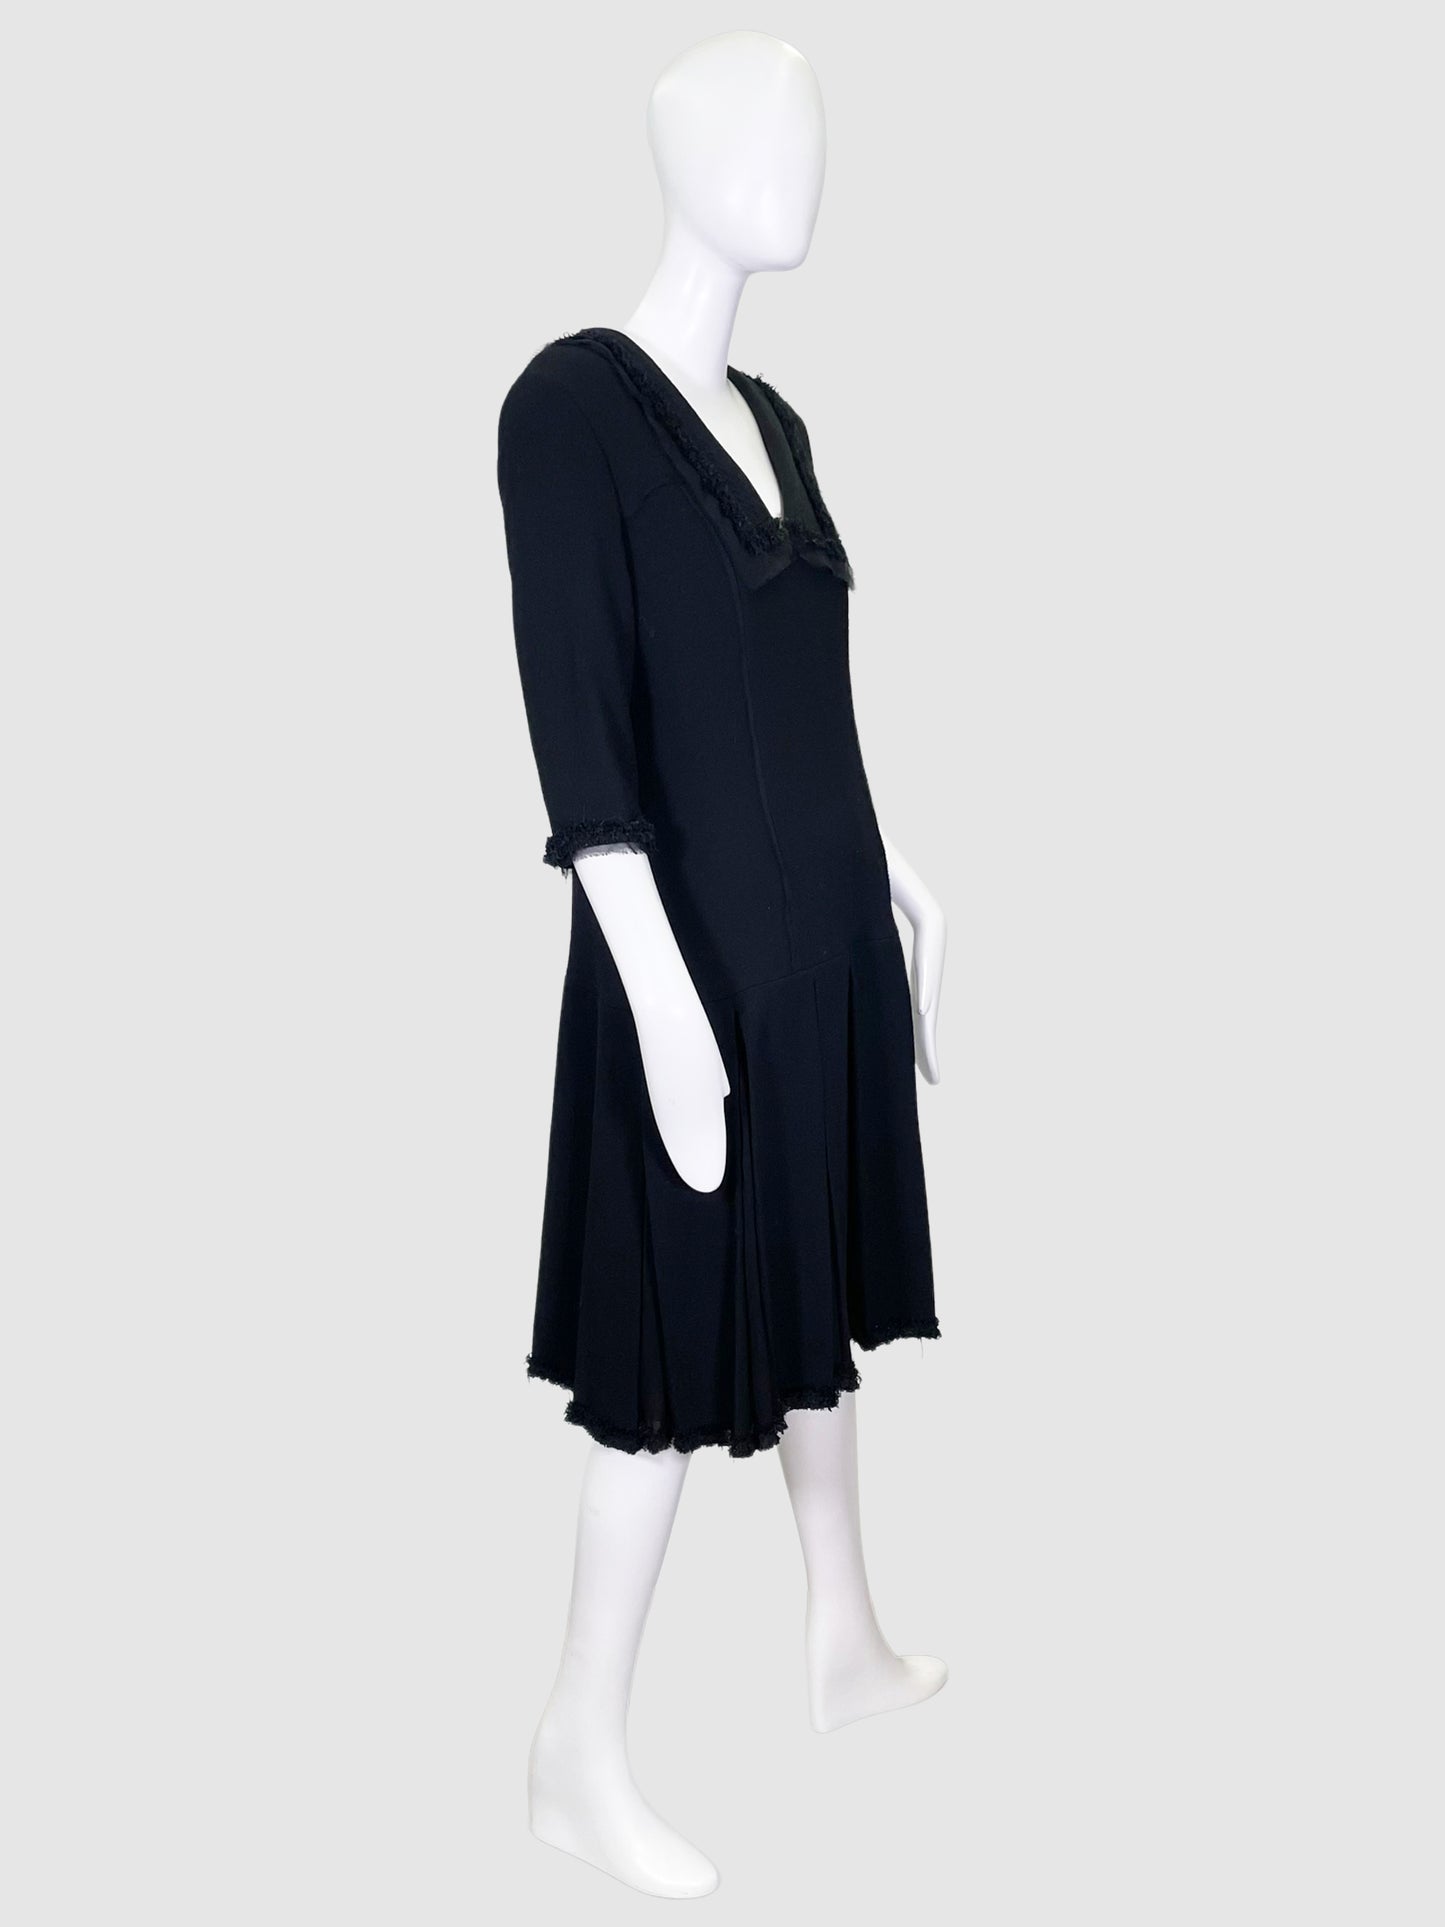 Oscar de la Renta Collared Wool Midi Dress - Size 14